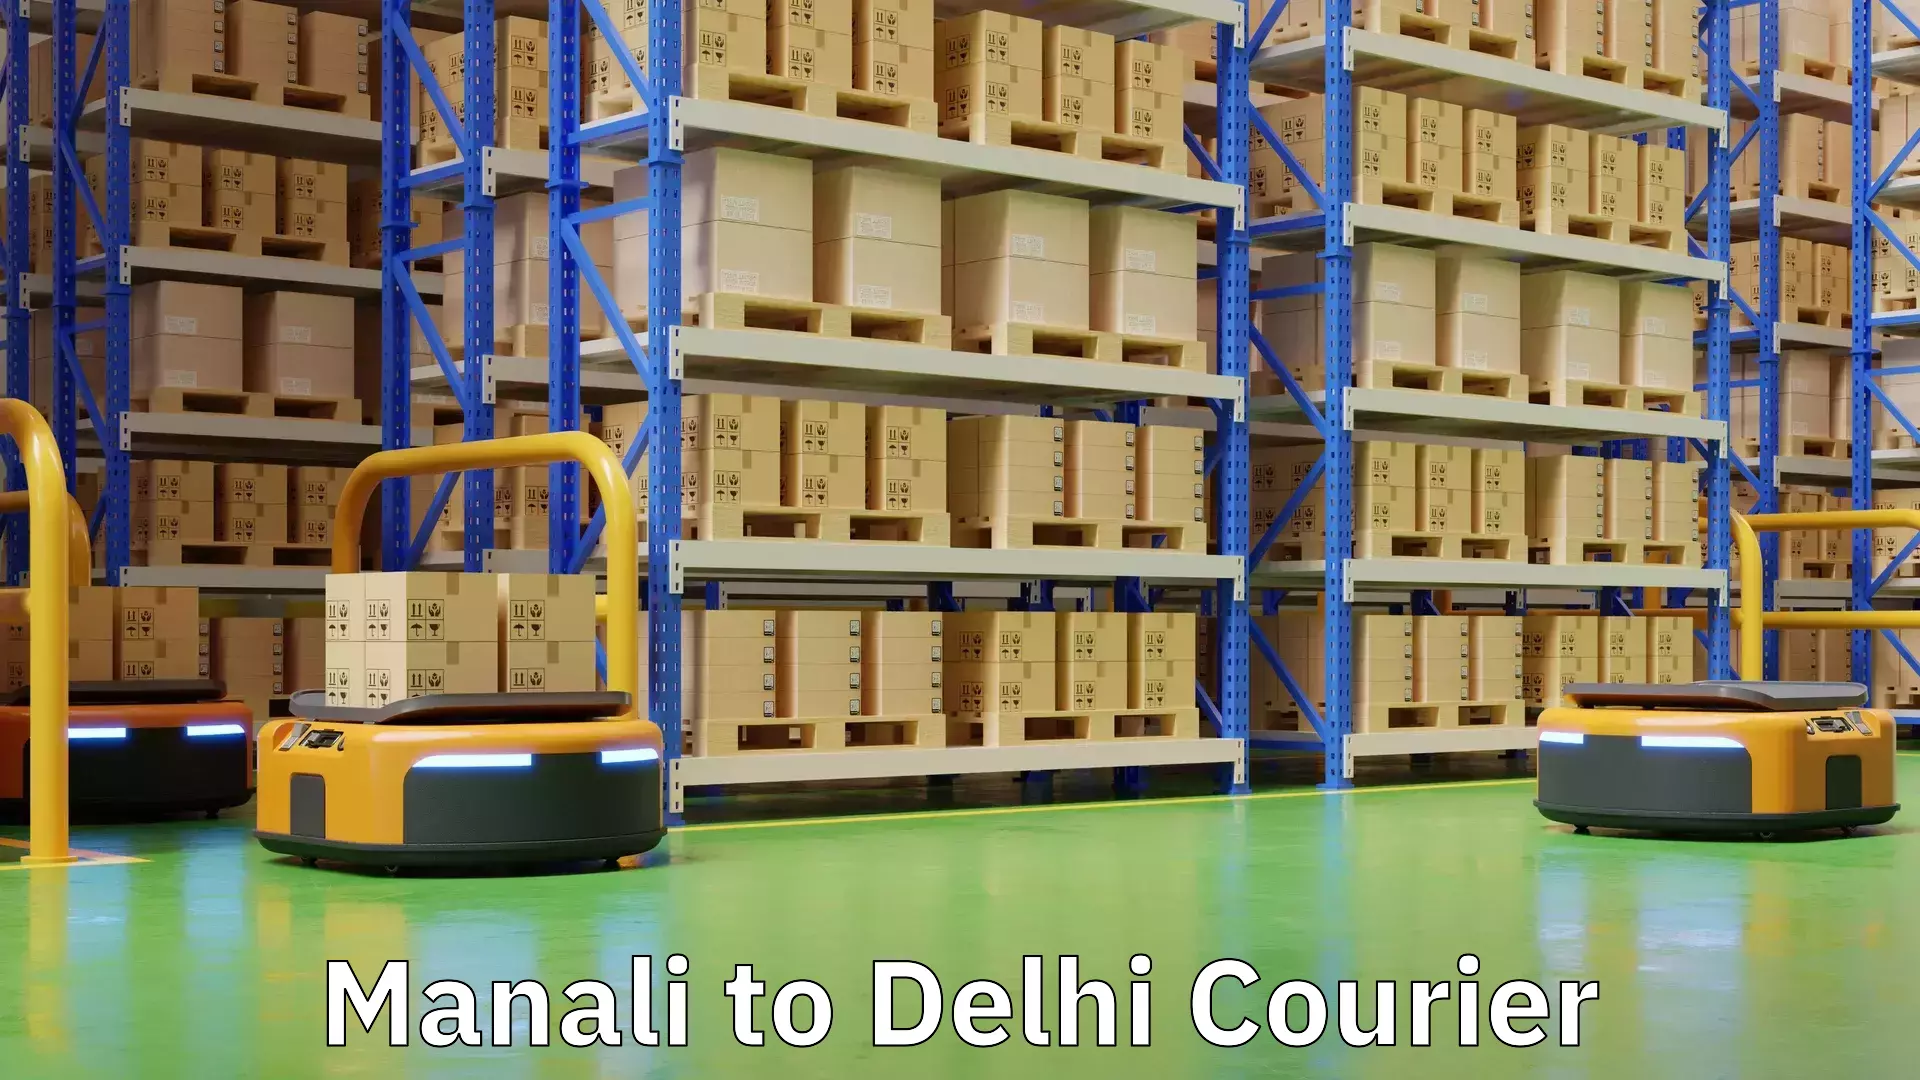 Delivery service partnership Manali to Delhi